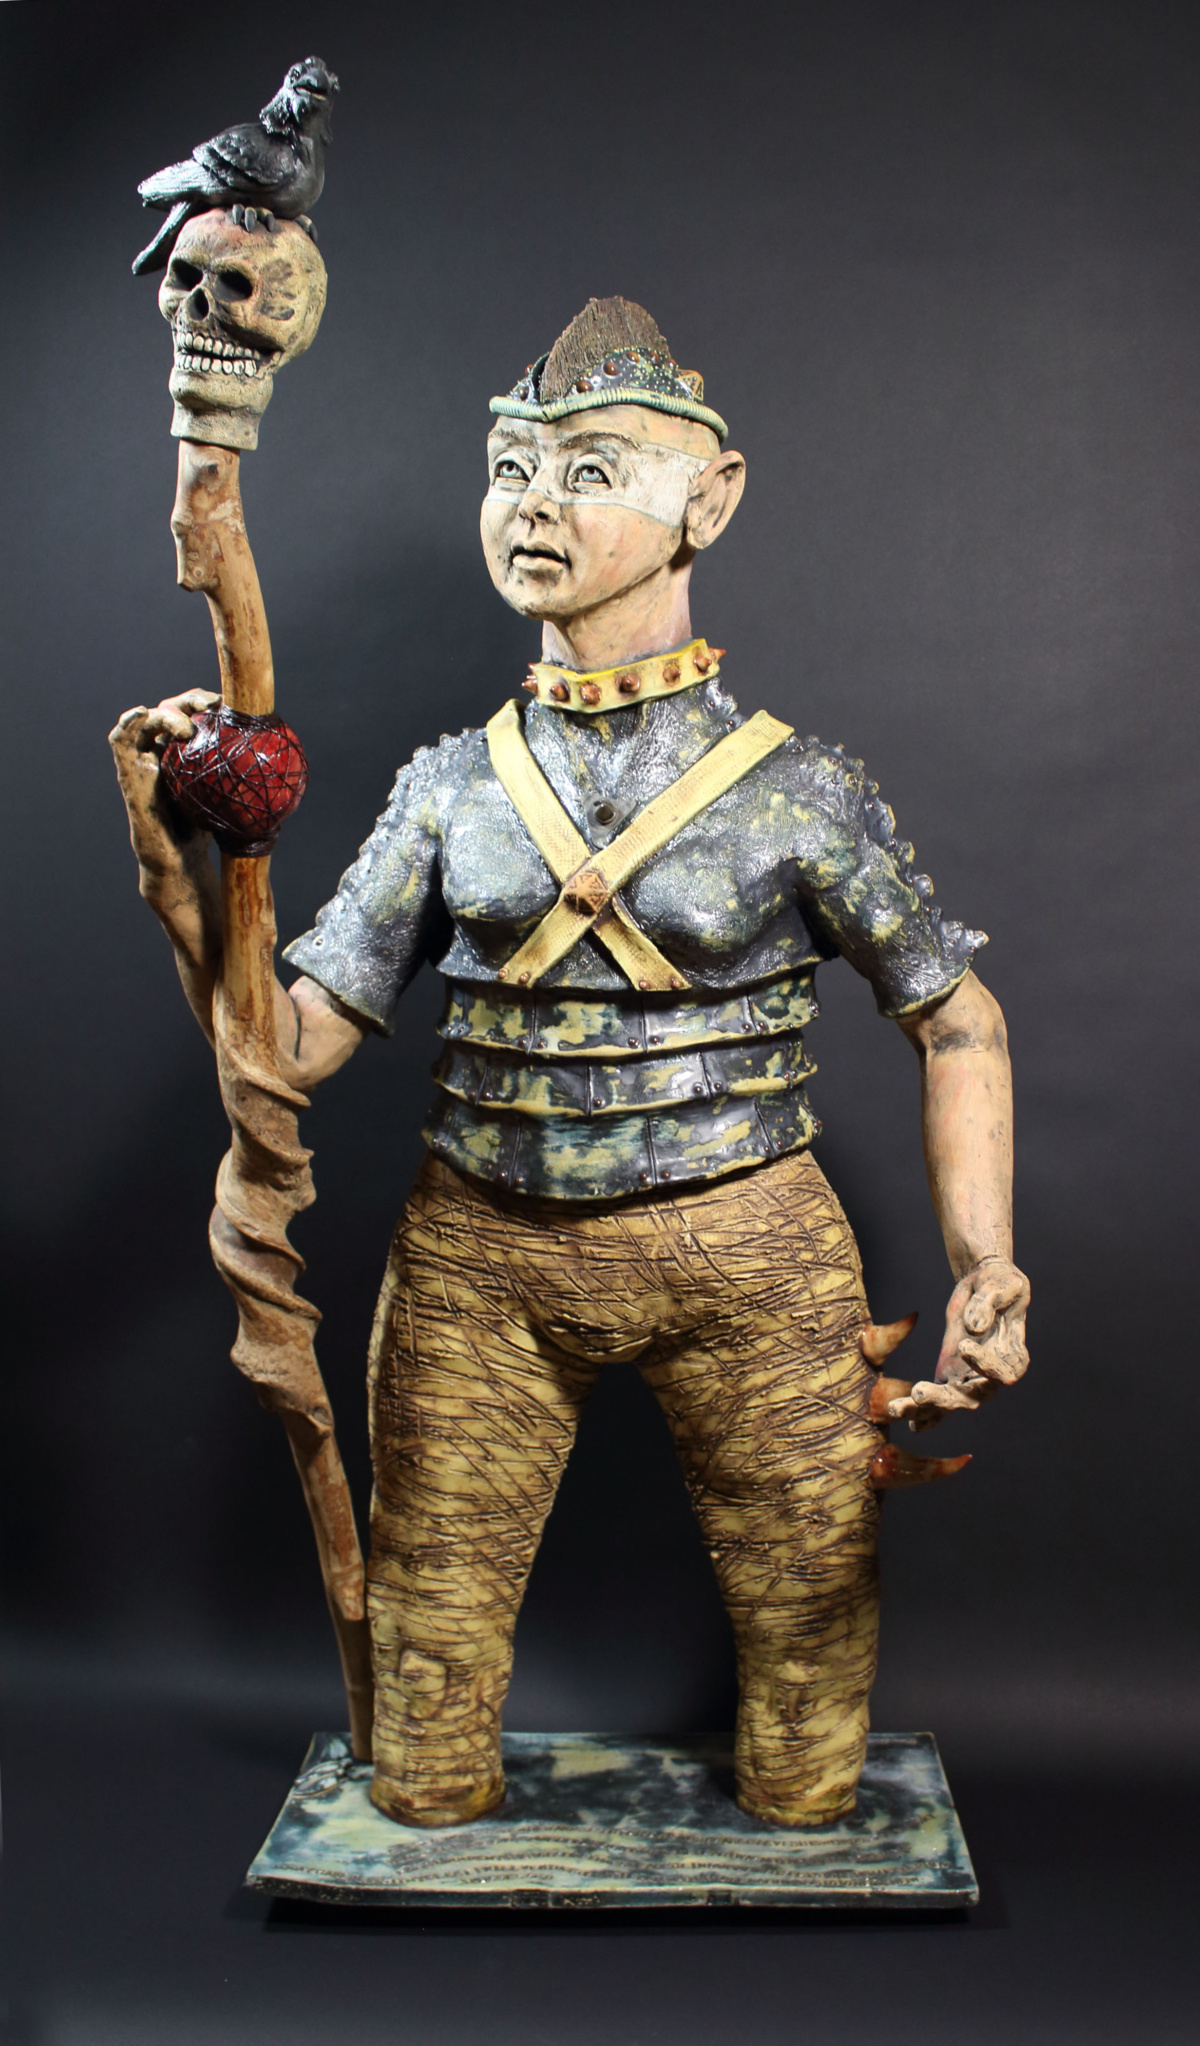 Ceramic Sculpture with wood staff